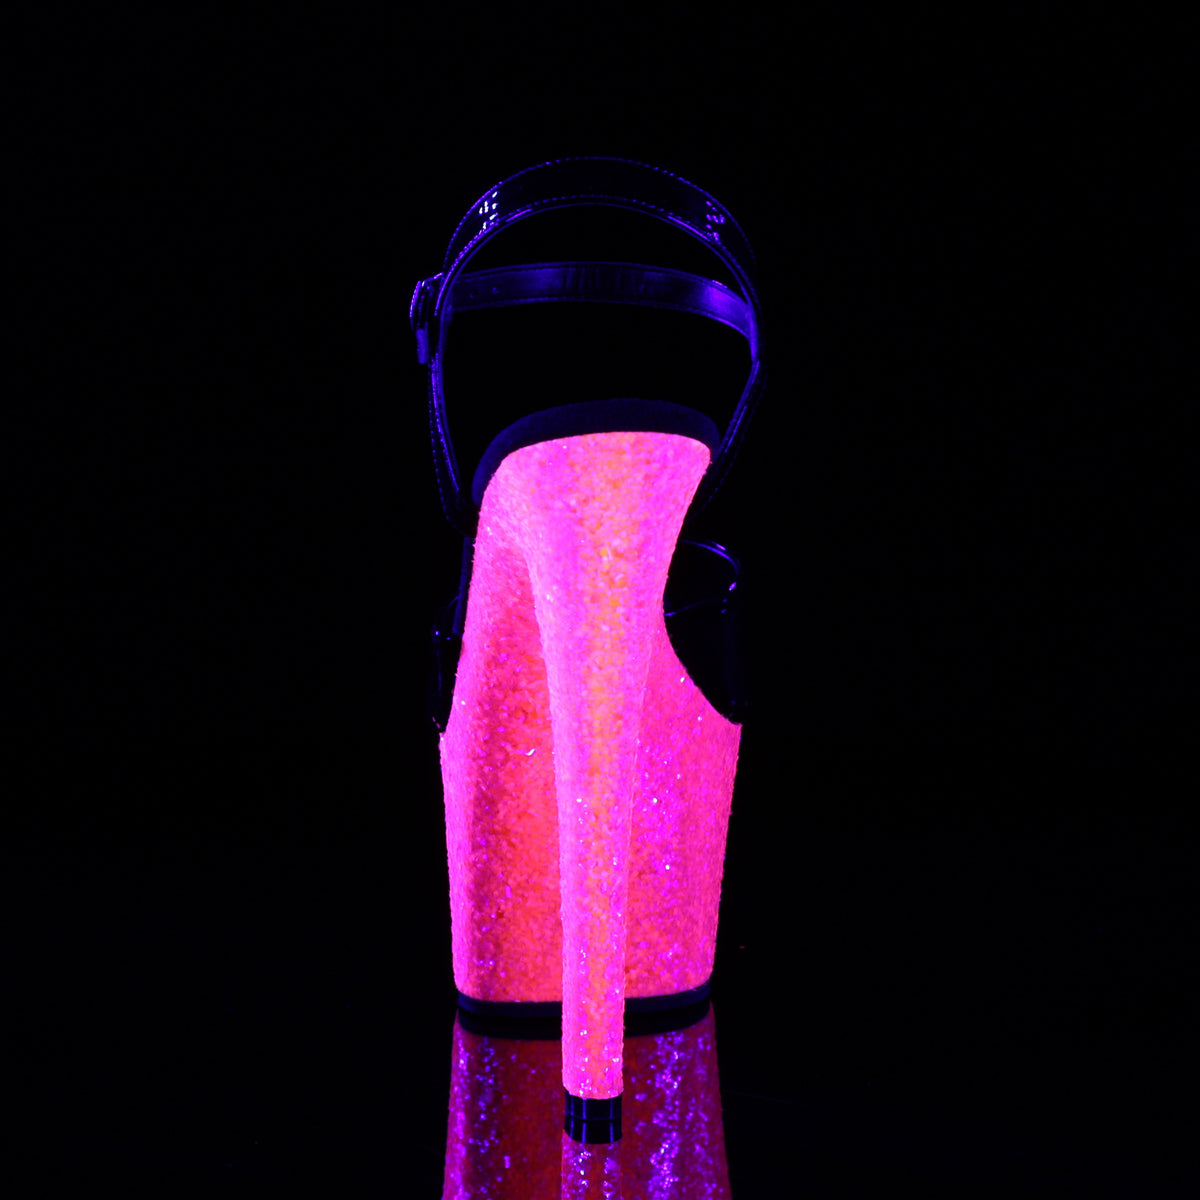 Pleaser Womens Sandals SKY-309UVLG Blk Pat/Neon H. Pink Glitter